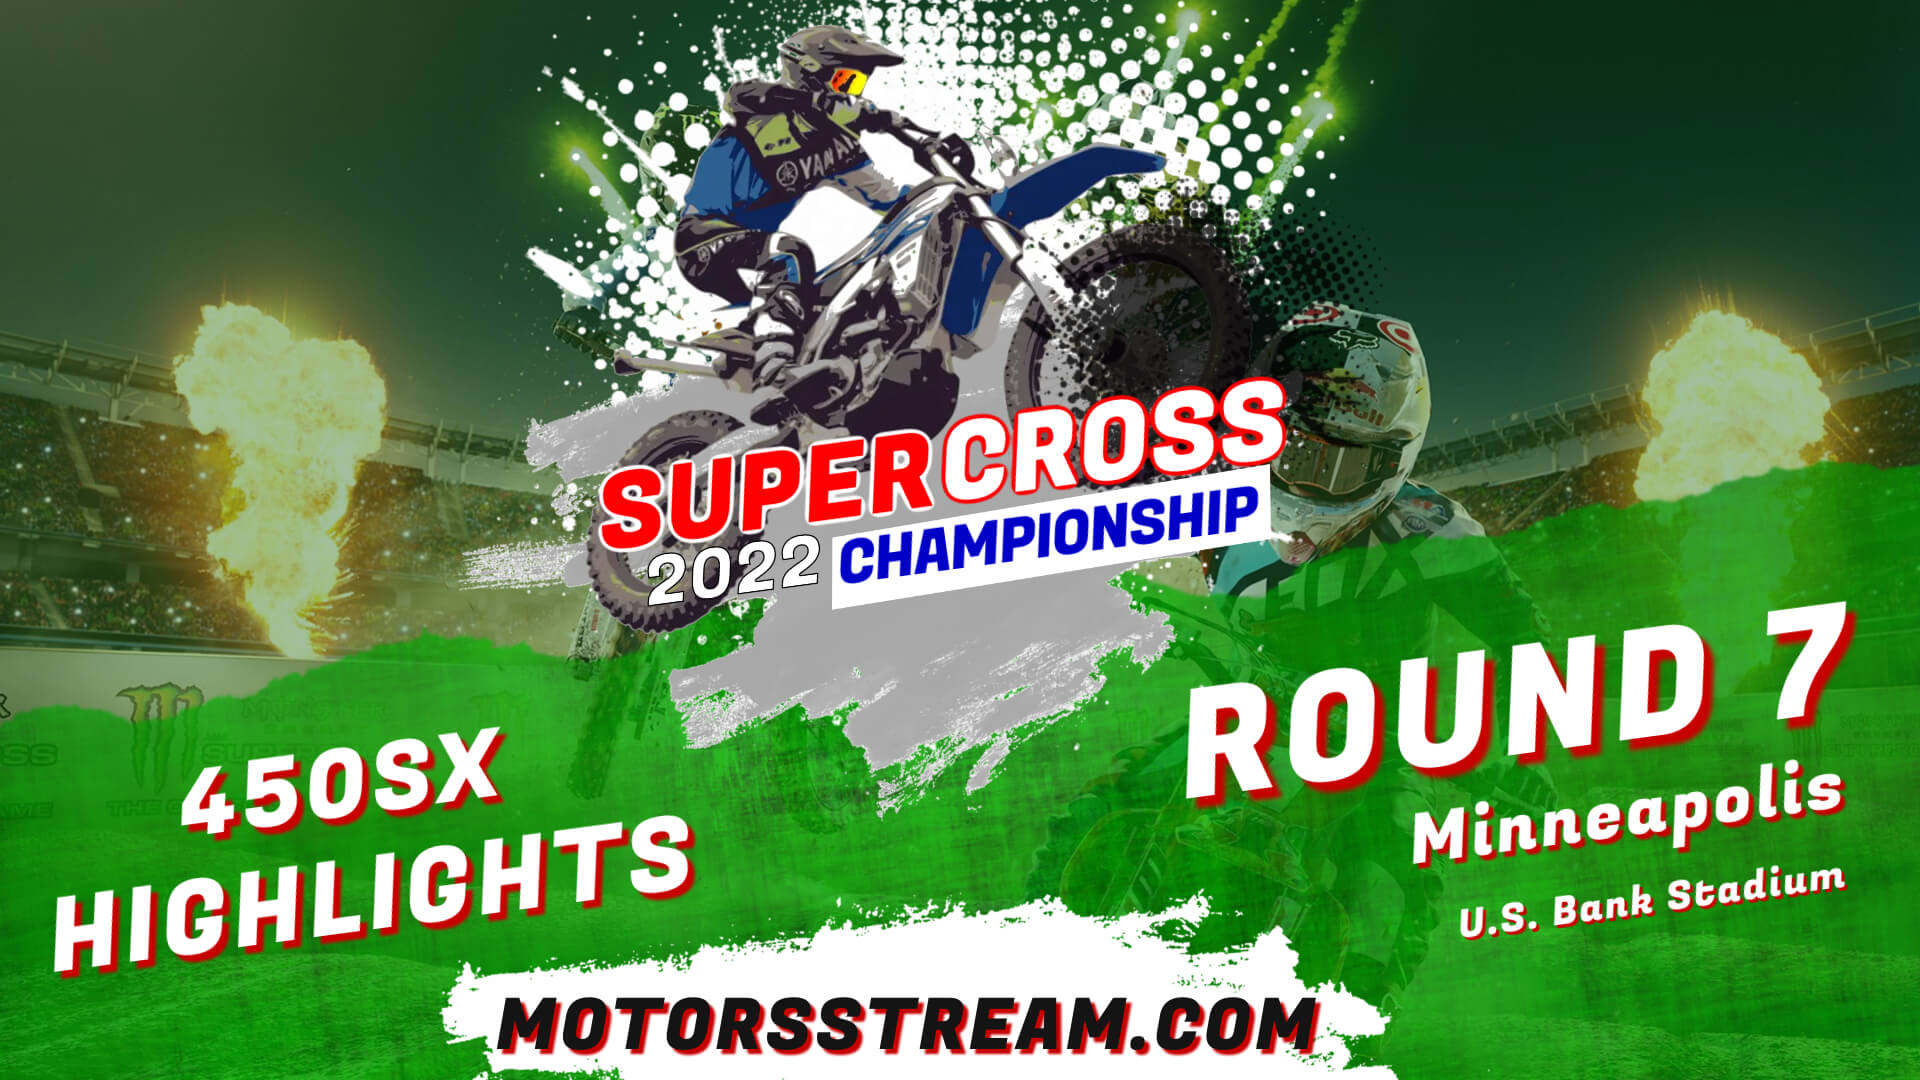 Supercross Round 7 Minneapolis 450SX Highlights 2022